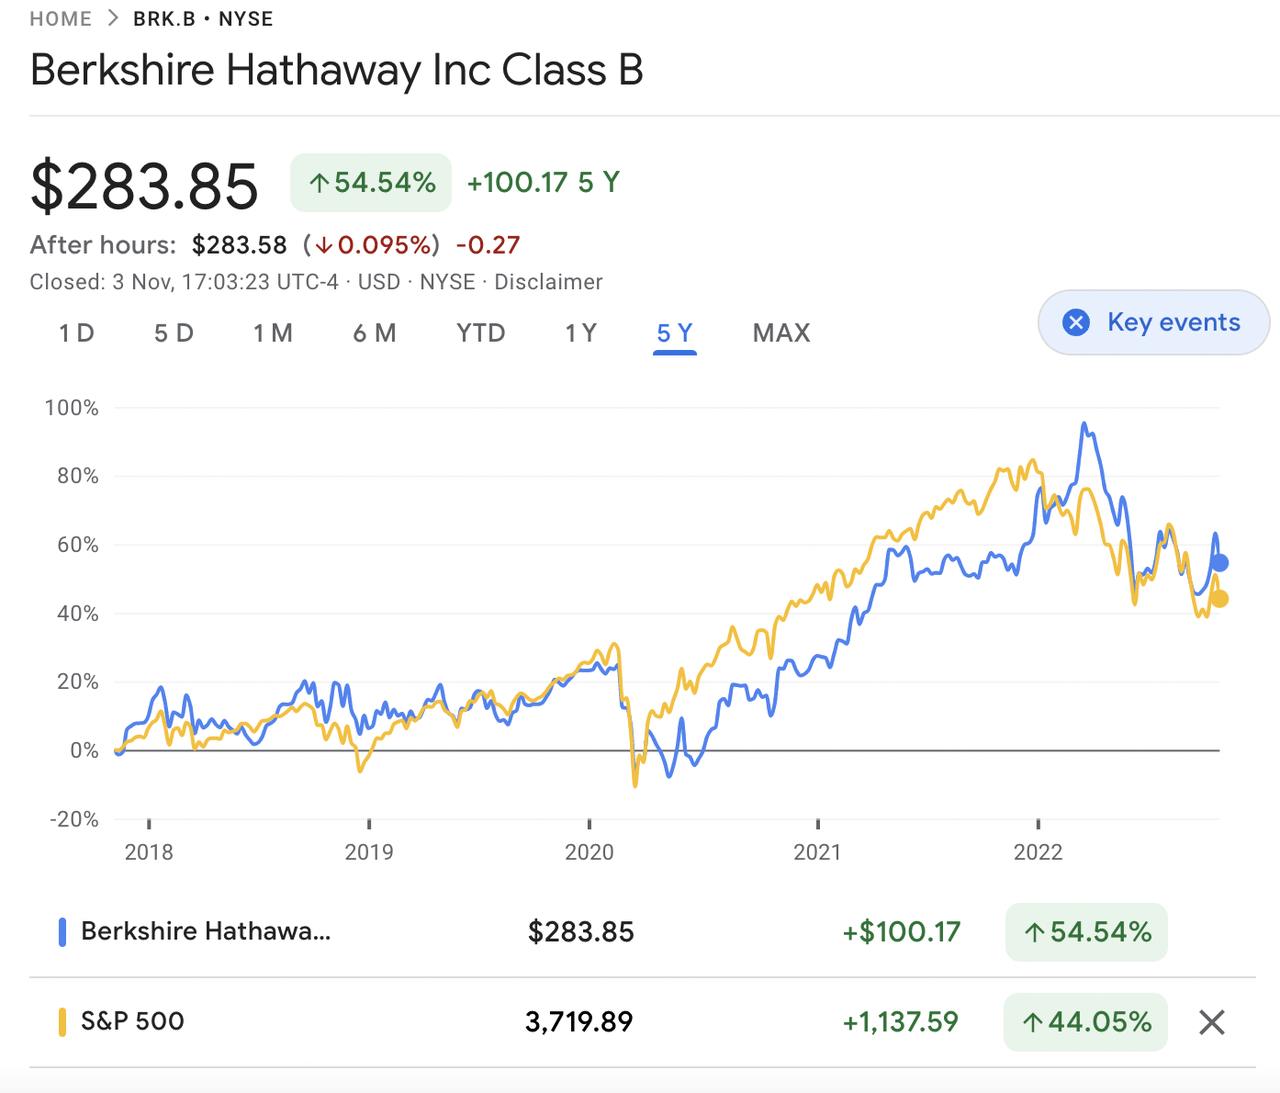 Berkshire hathaway vs the S&P 500